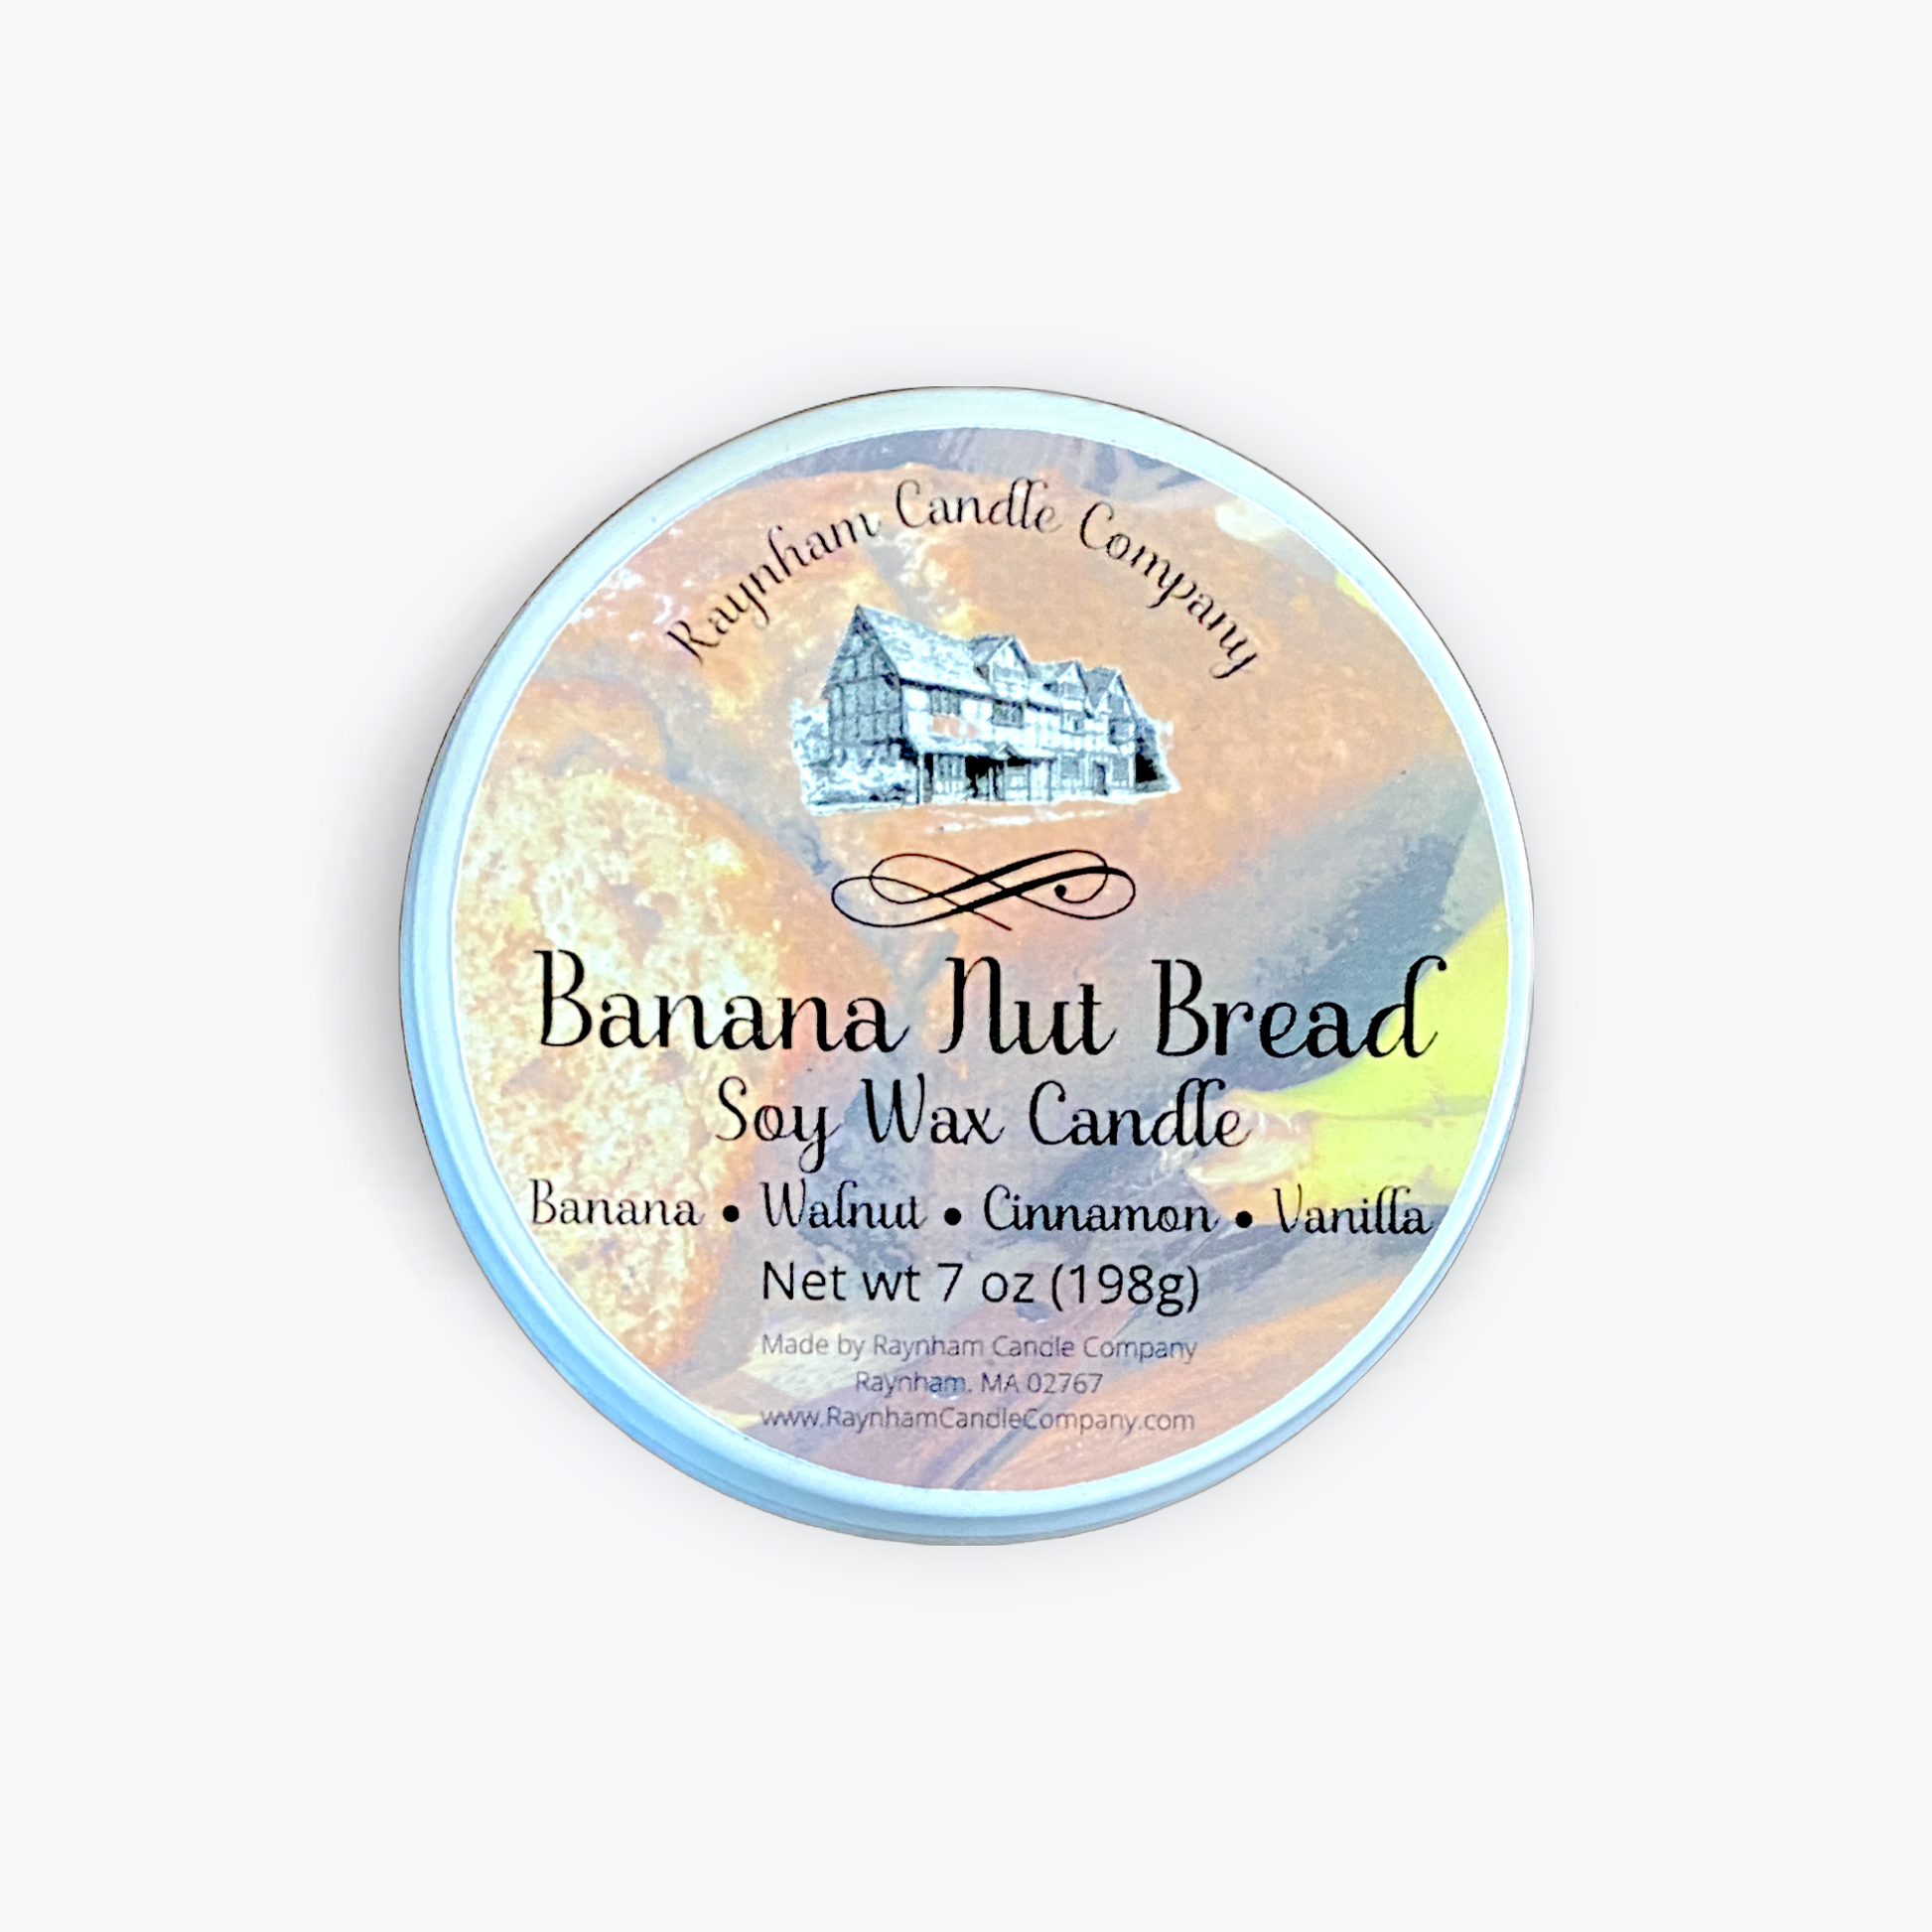 Banana Nut Bread - Premium  from Raynham Candle Company  - Just $4.50! Shop now at Raynham Candle Company 